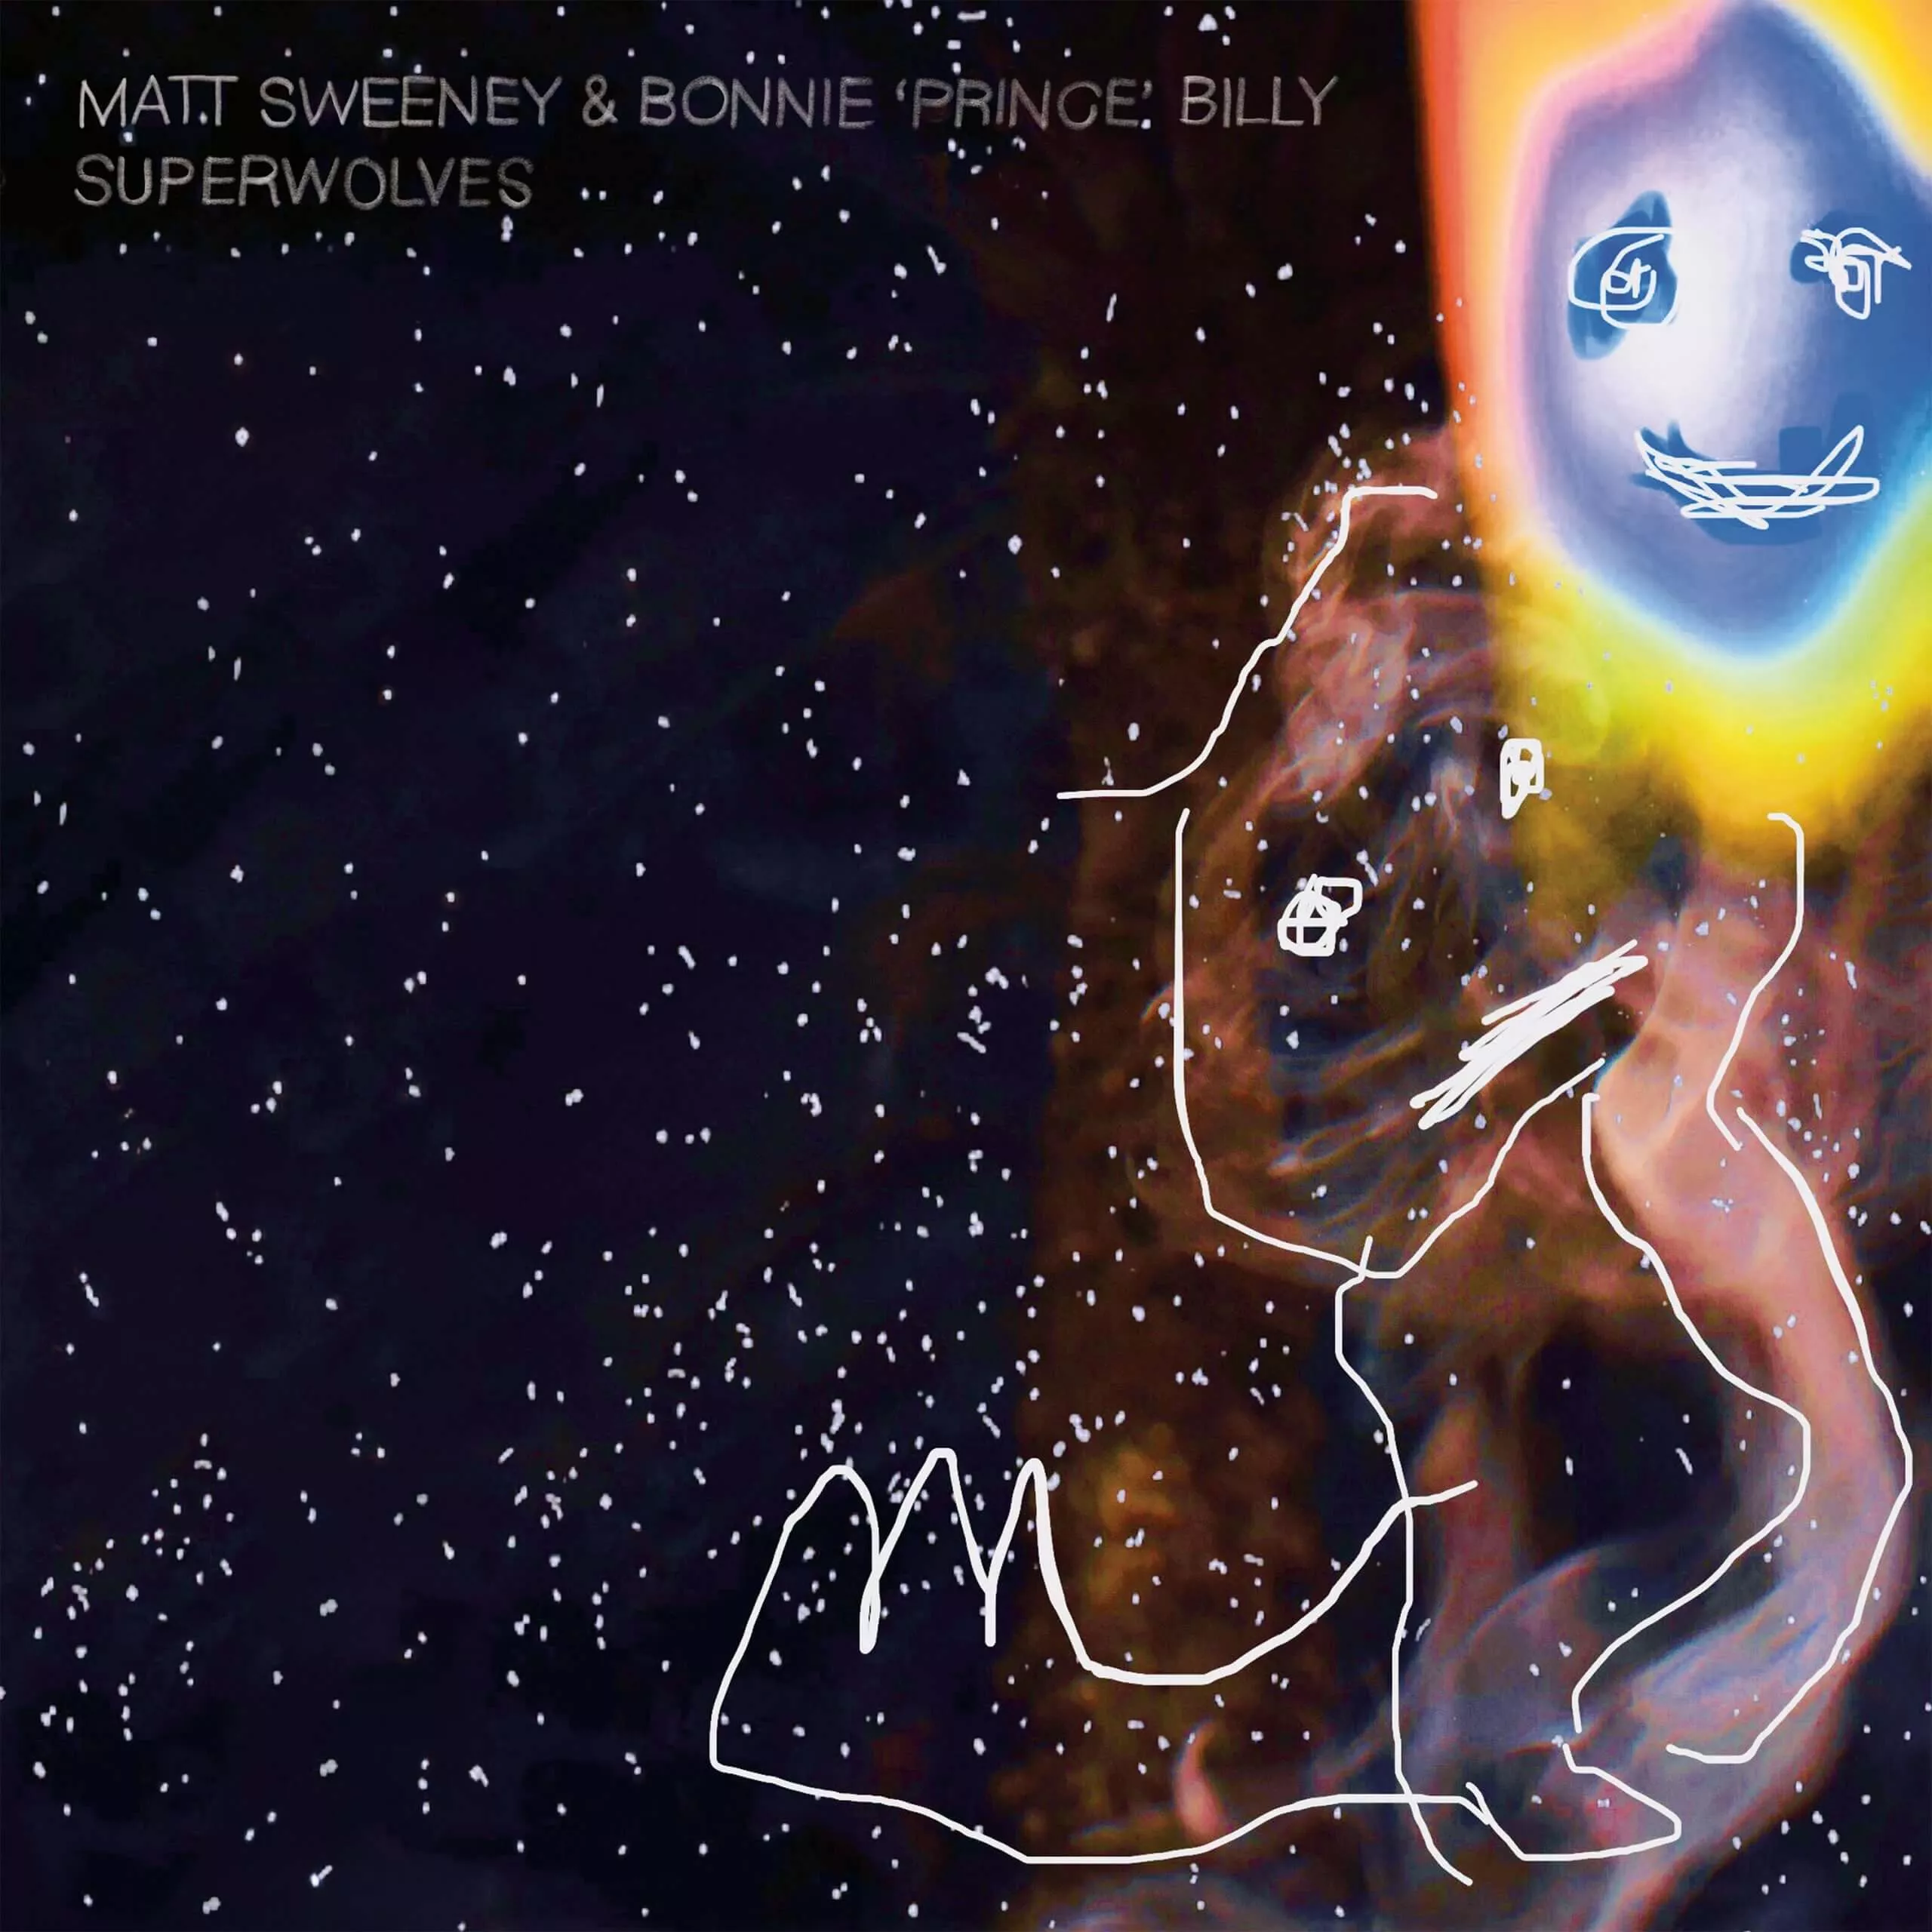 Superwolves - Matt Sweeney & Bonnie 'Prince' Billy